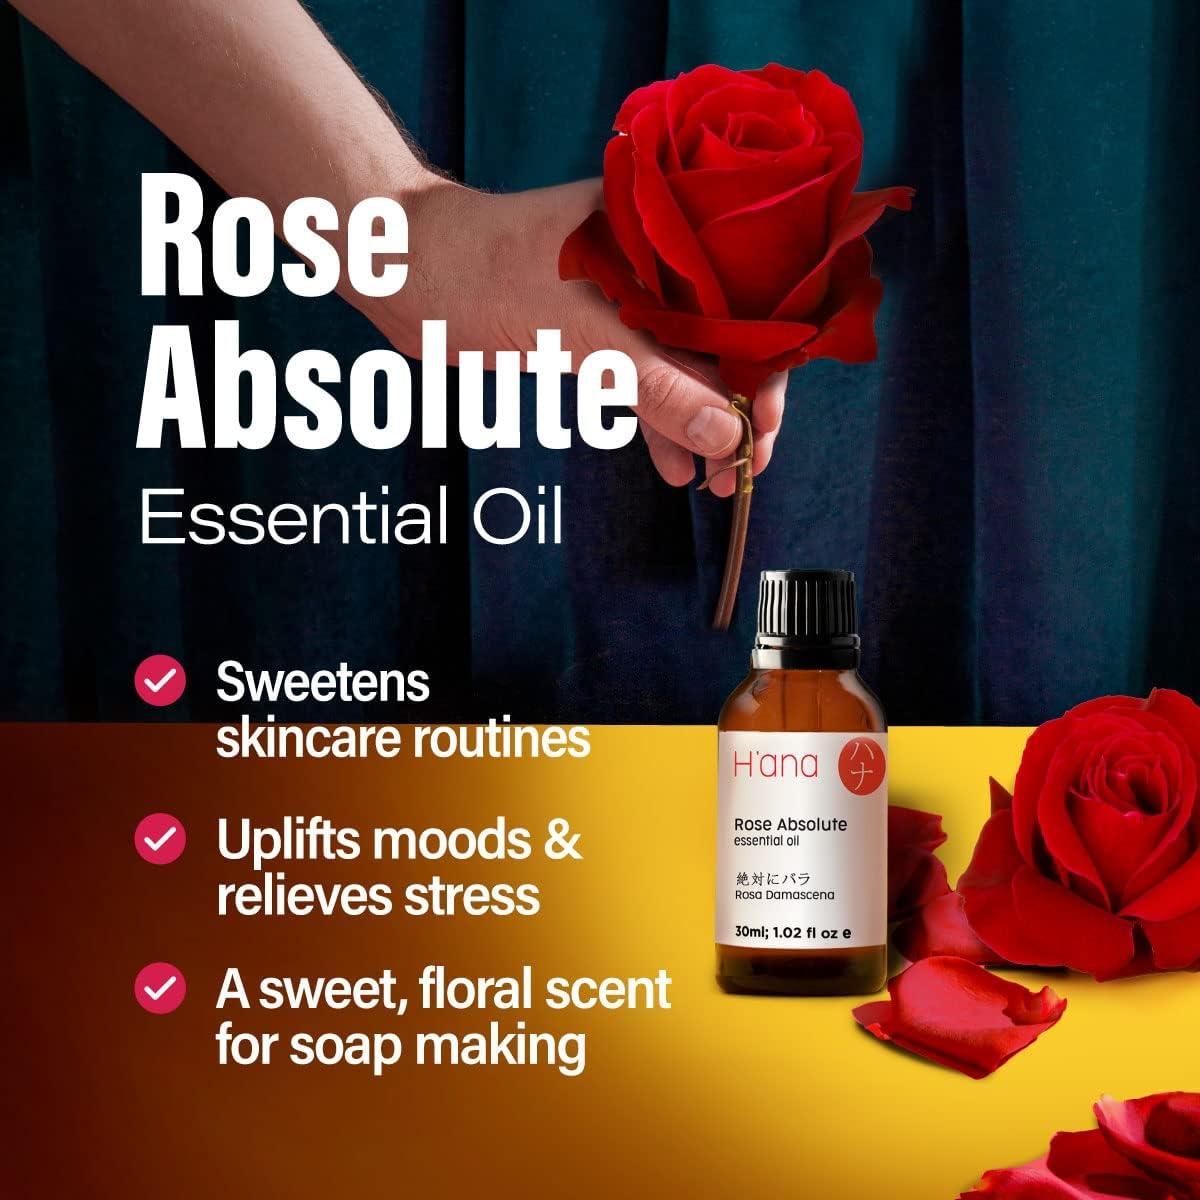 Vanilla Essential Oil - 100% Pure Therapeutic Grade for Aromatherapy, Skin Care, Hair, and Diffuser - 30ml